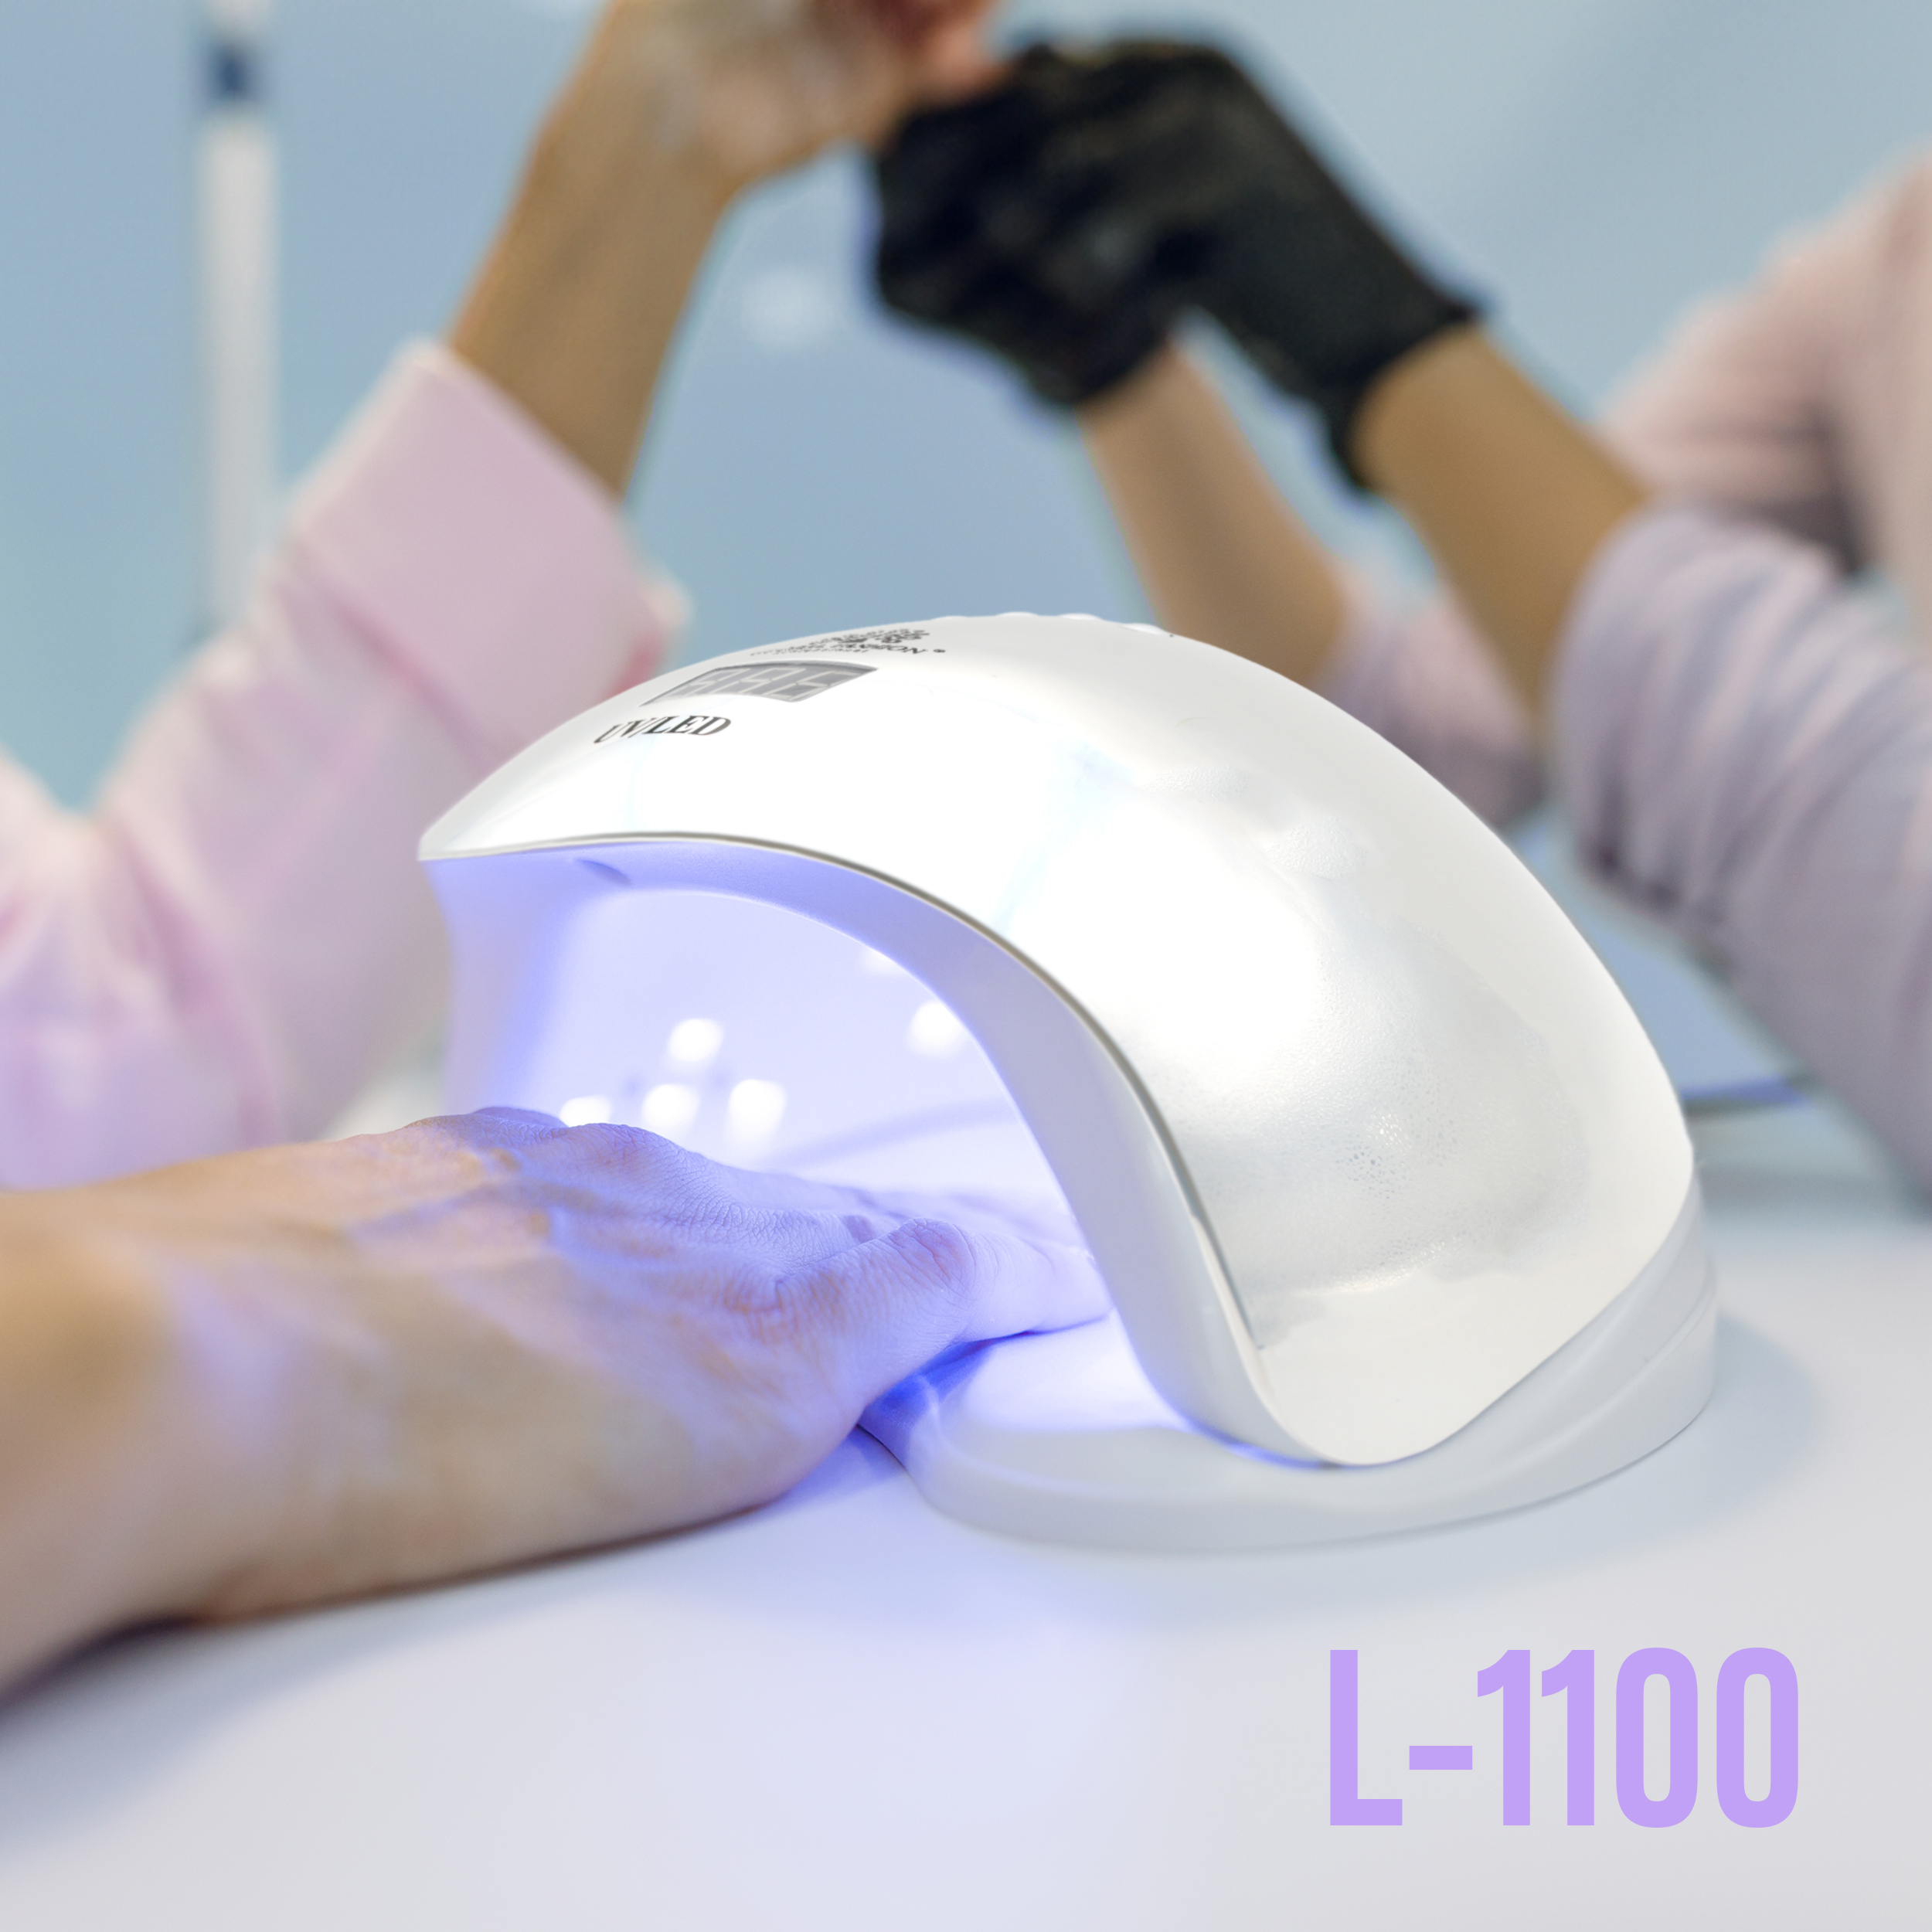 UV LED nail drying lamp L-1100 72W - high quality